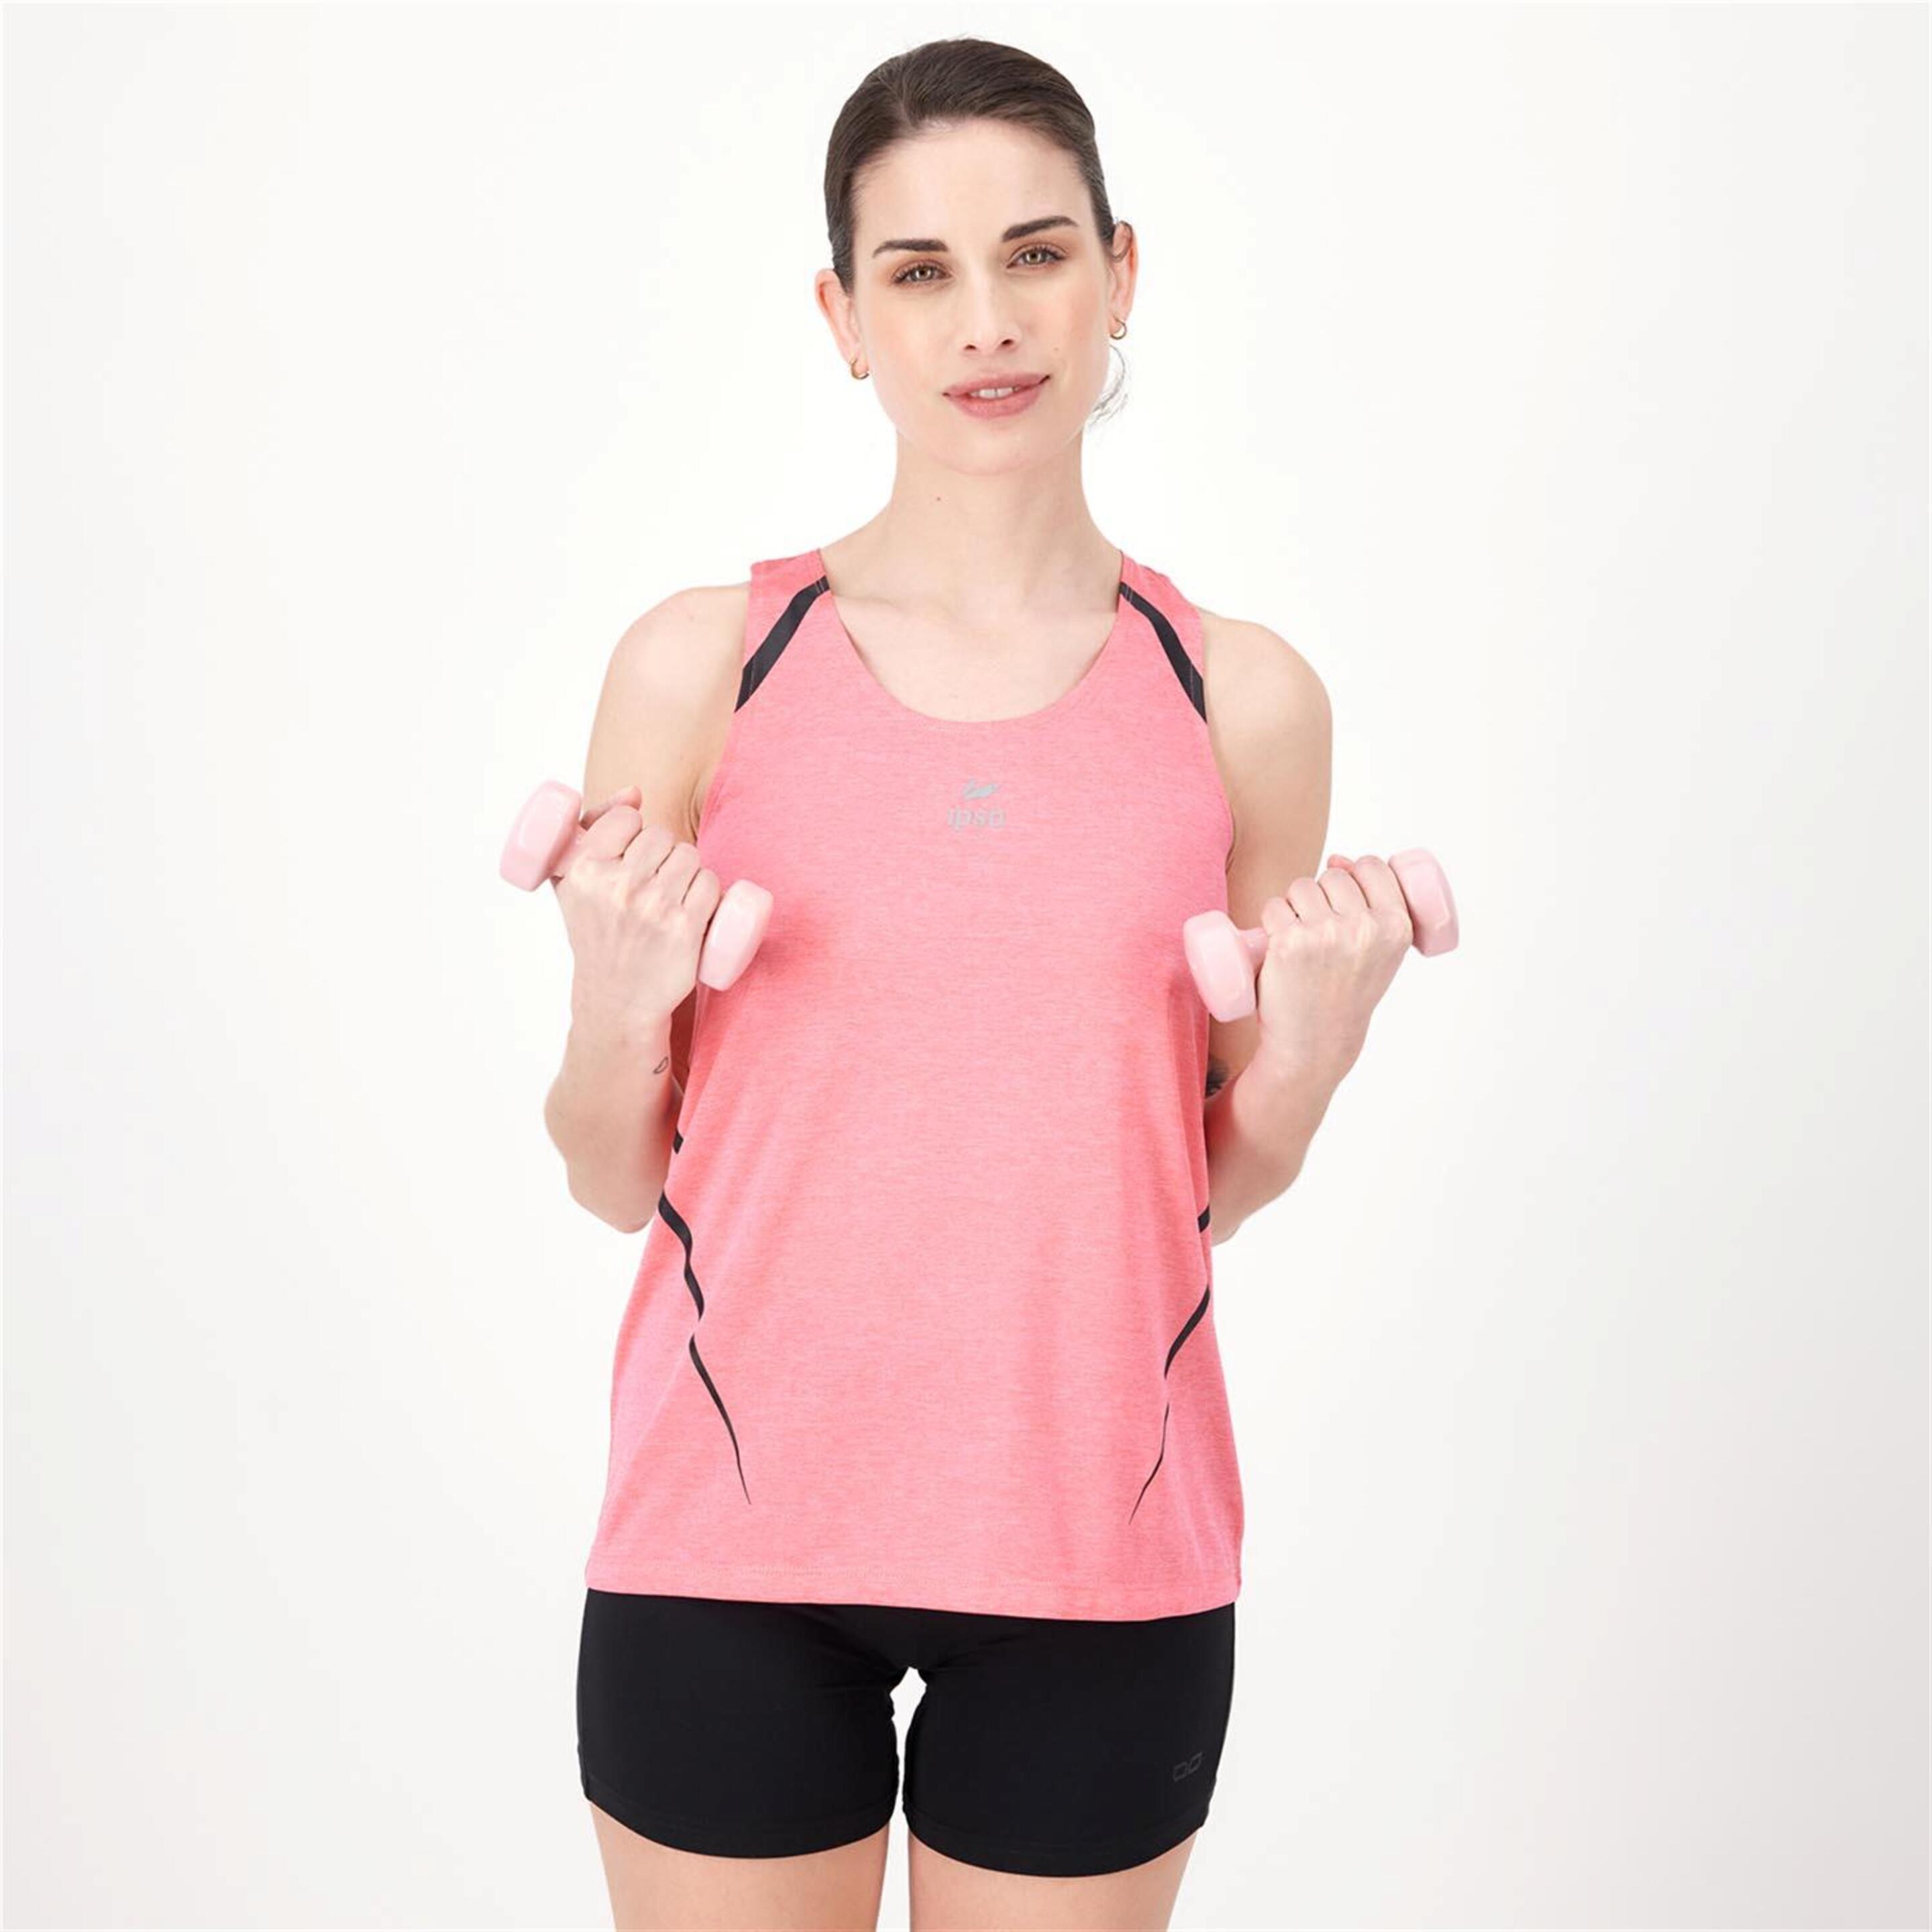 Camiseta Ipso - rosa - Camiseta Tirantes Mujer